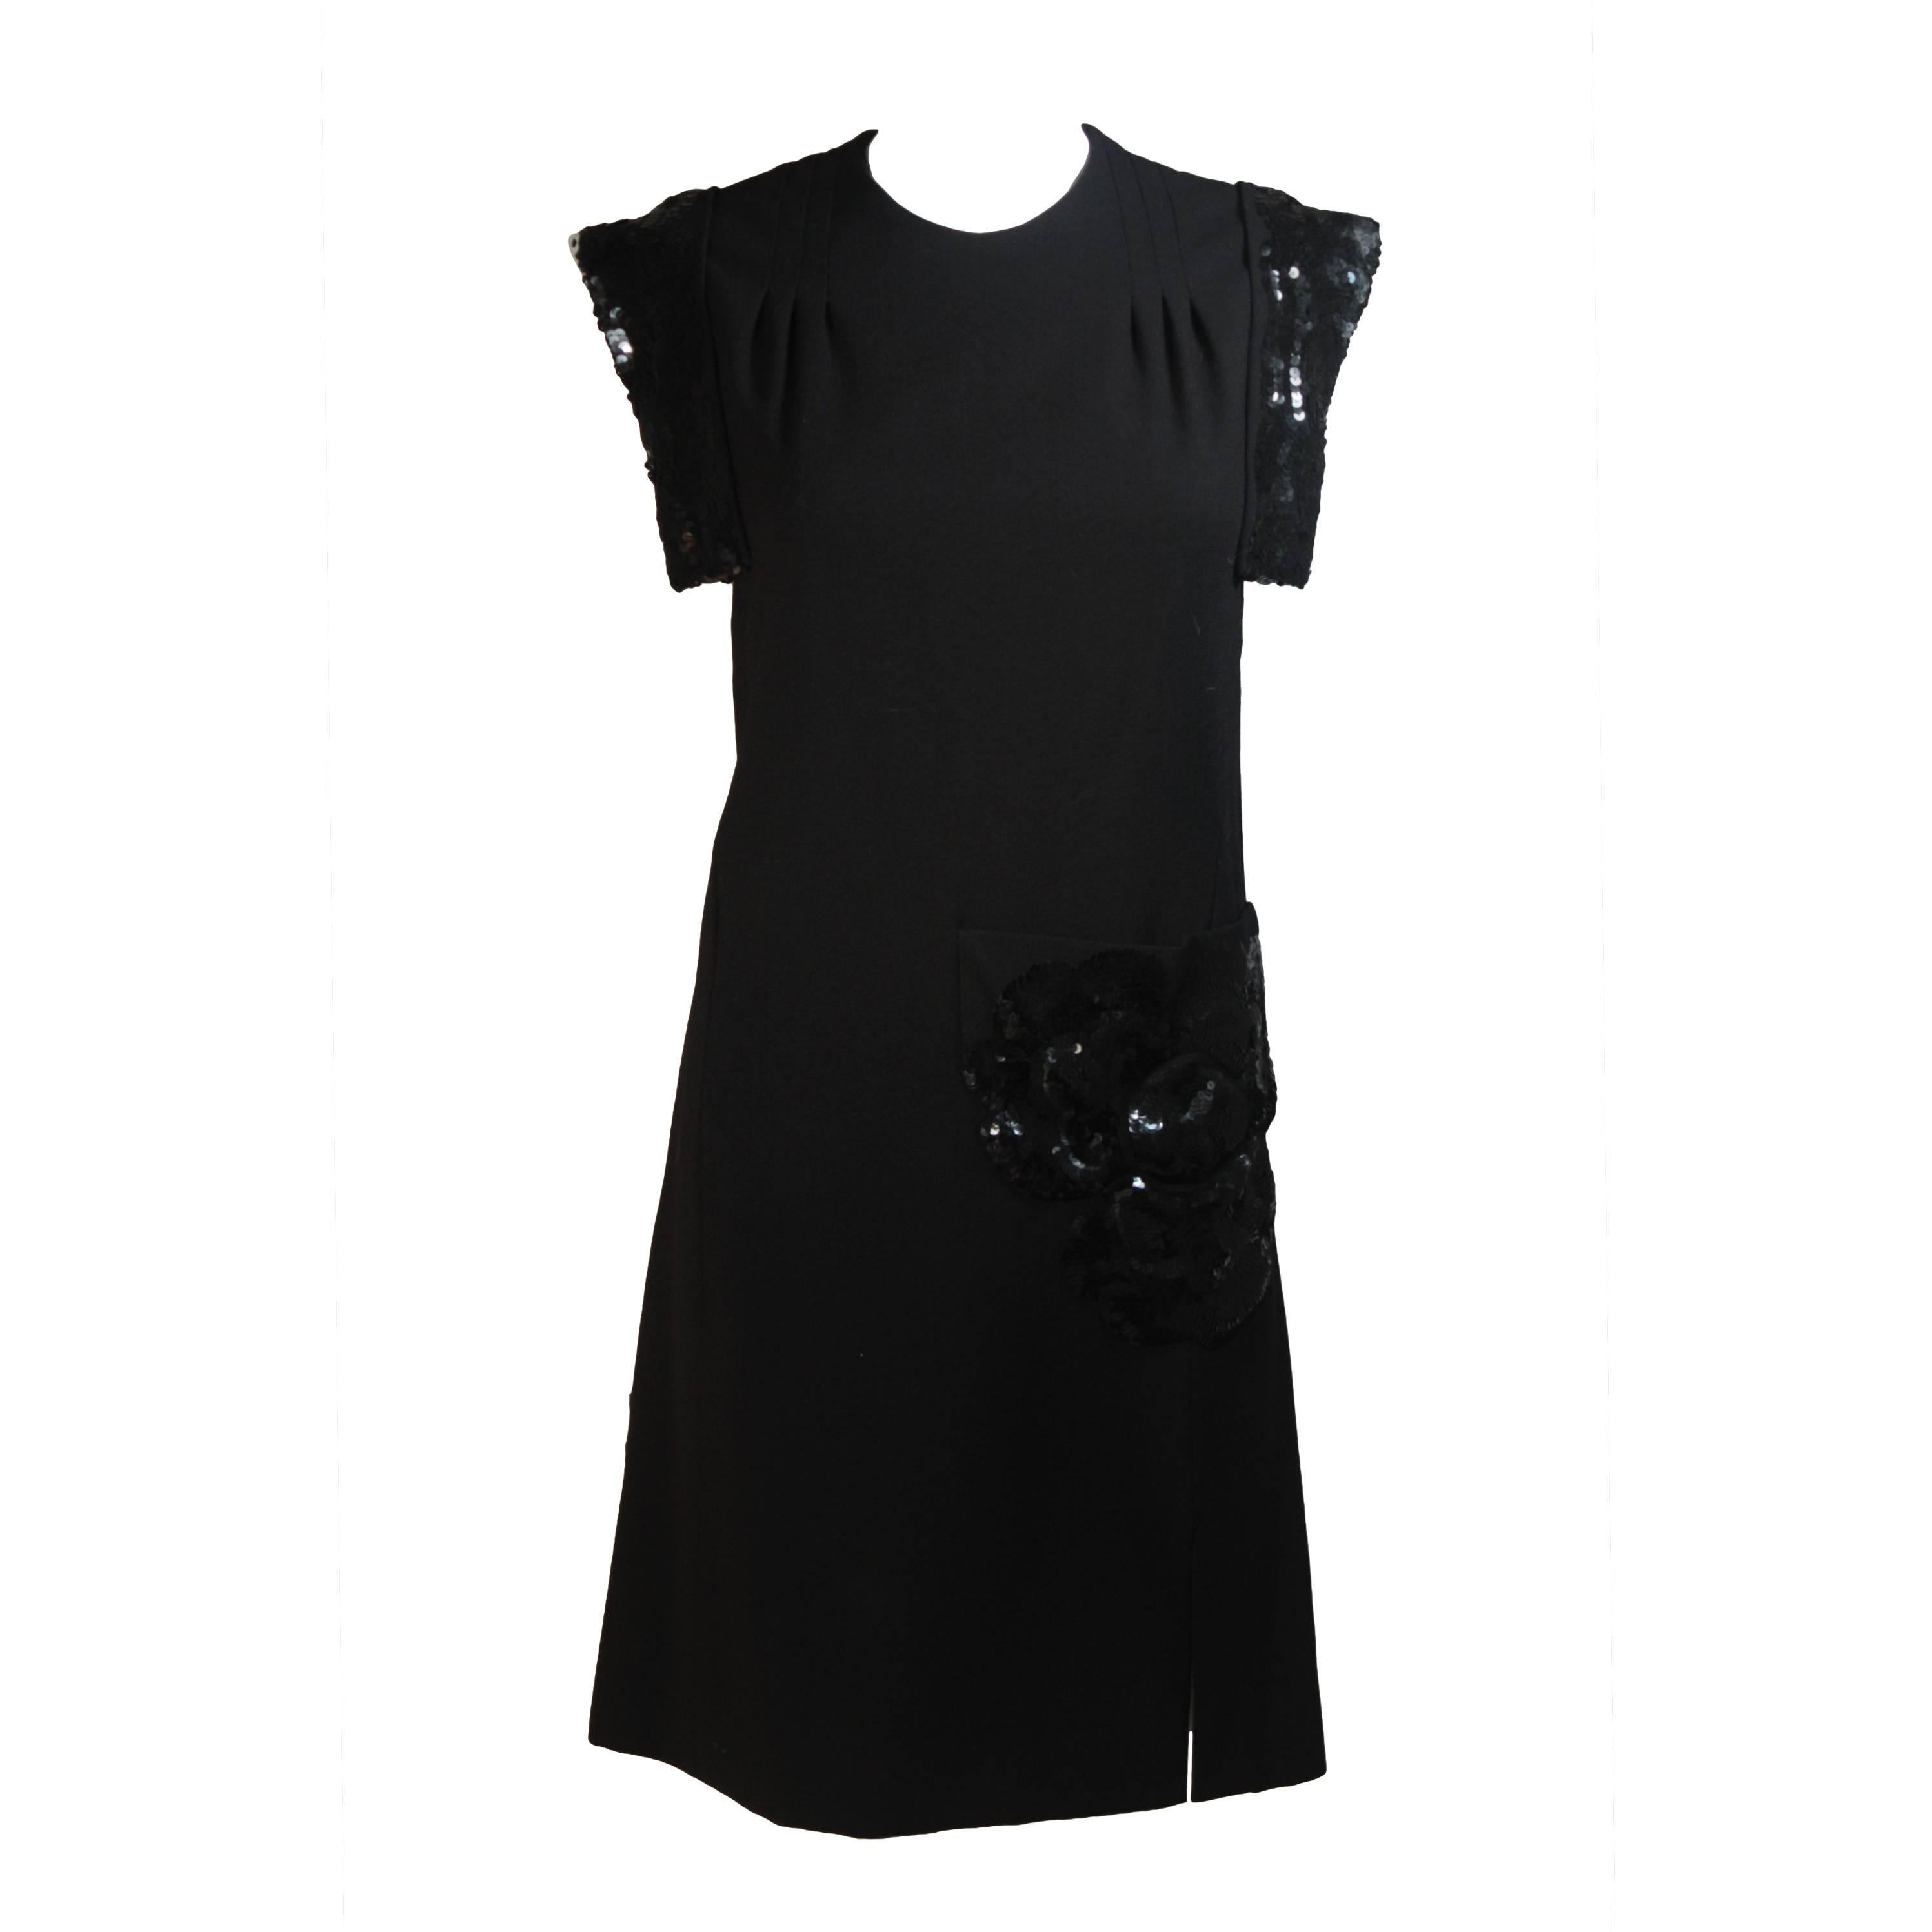 CARVEN COUTURE PARIS 1960's Black Sequin Dress with Structured Shoulders Size 2